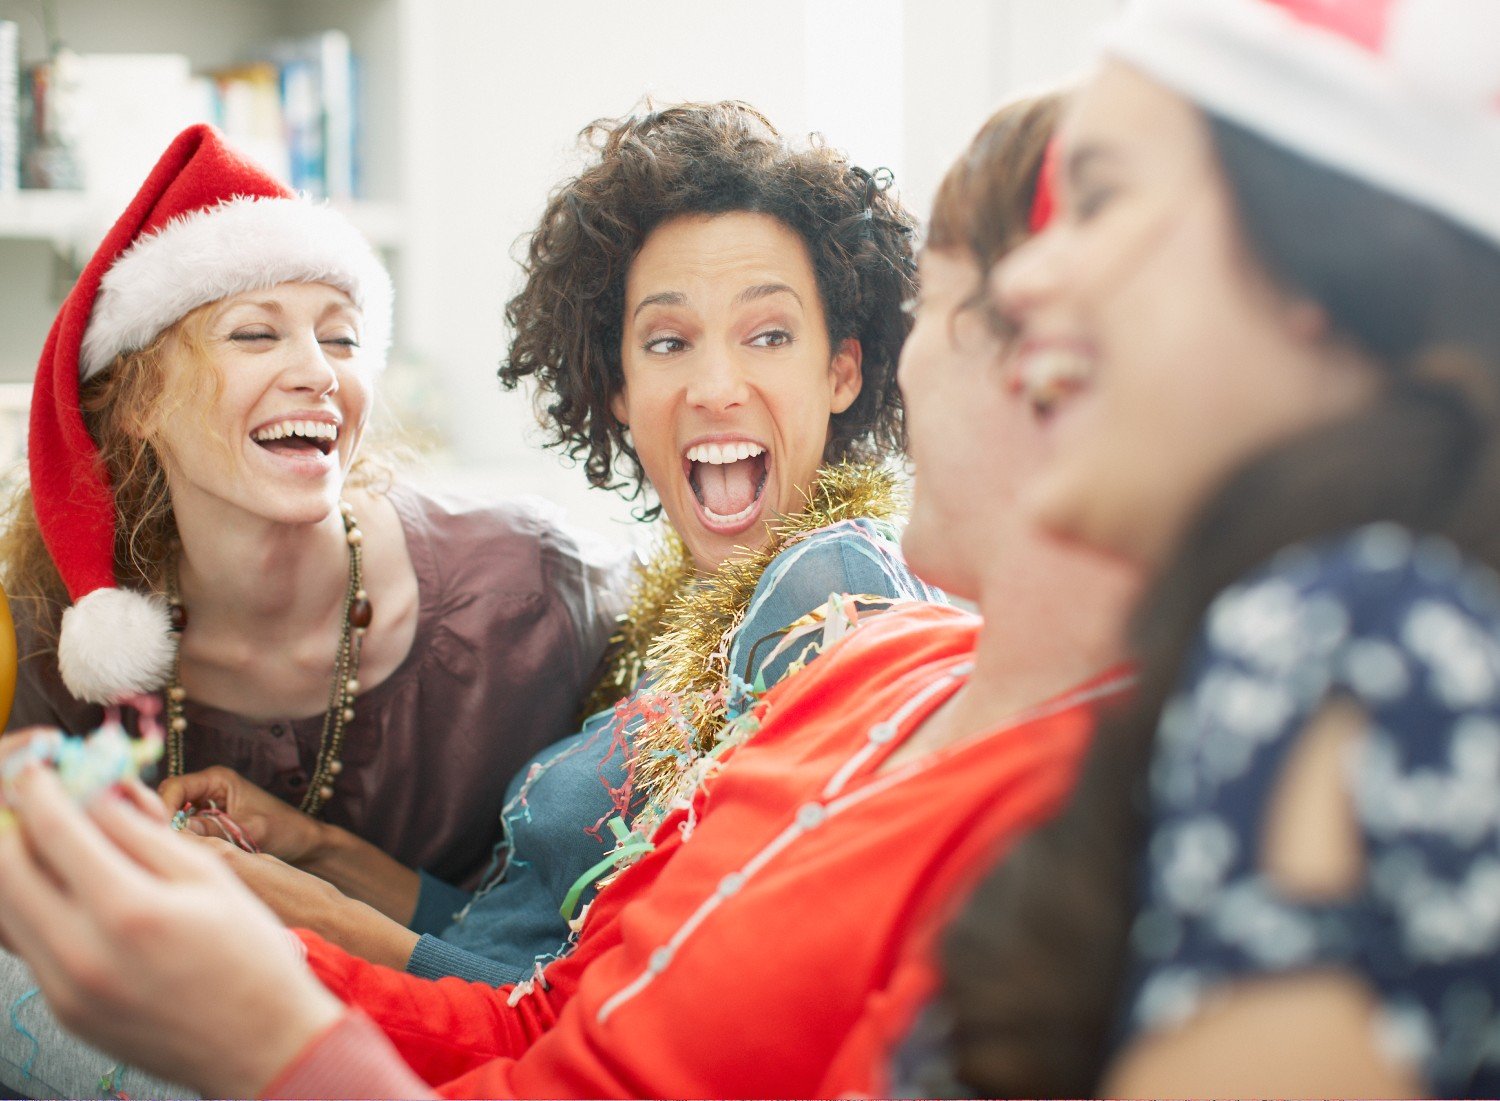 Women laughing wearing festive clothing